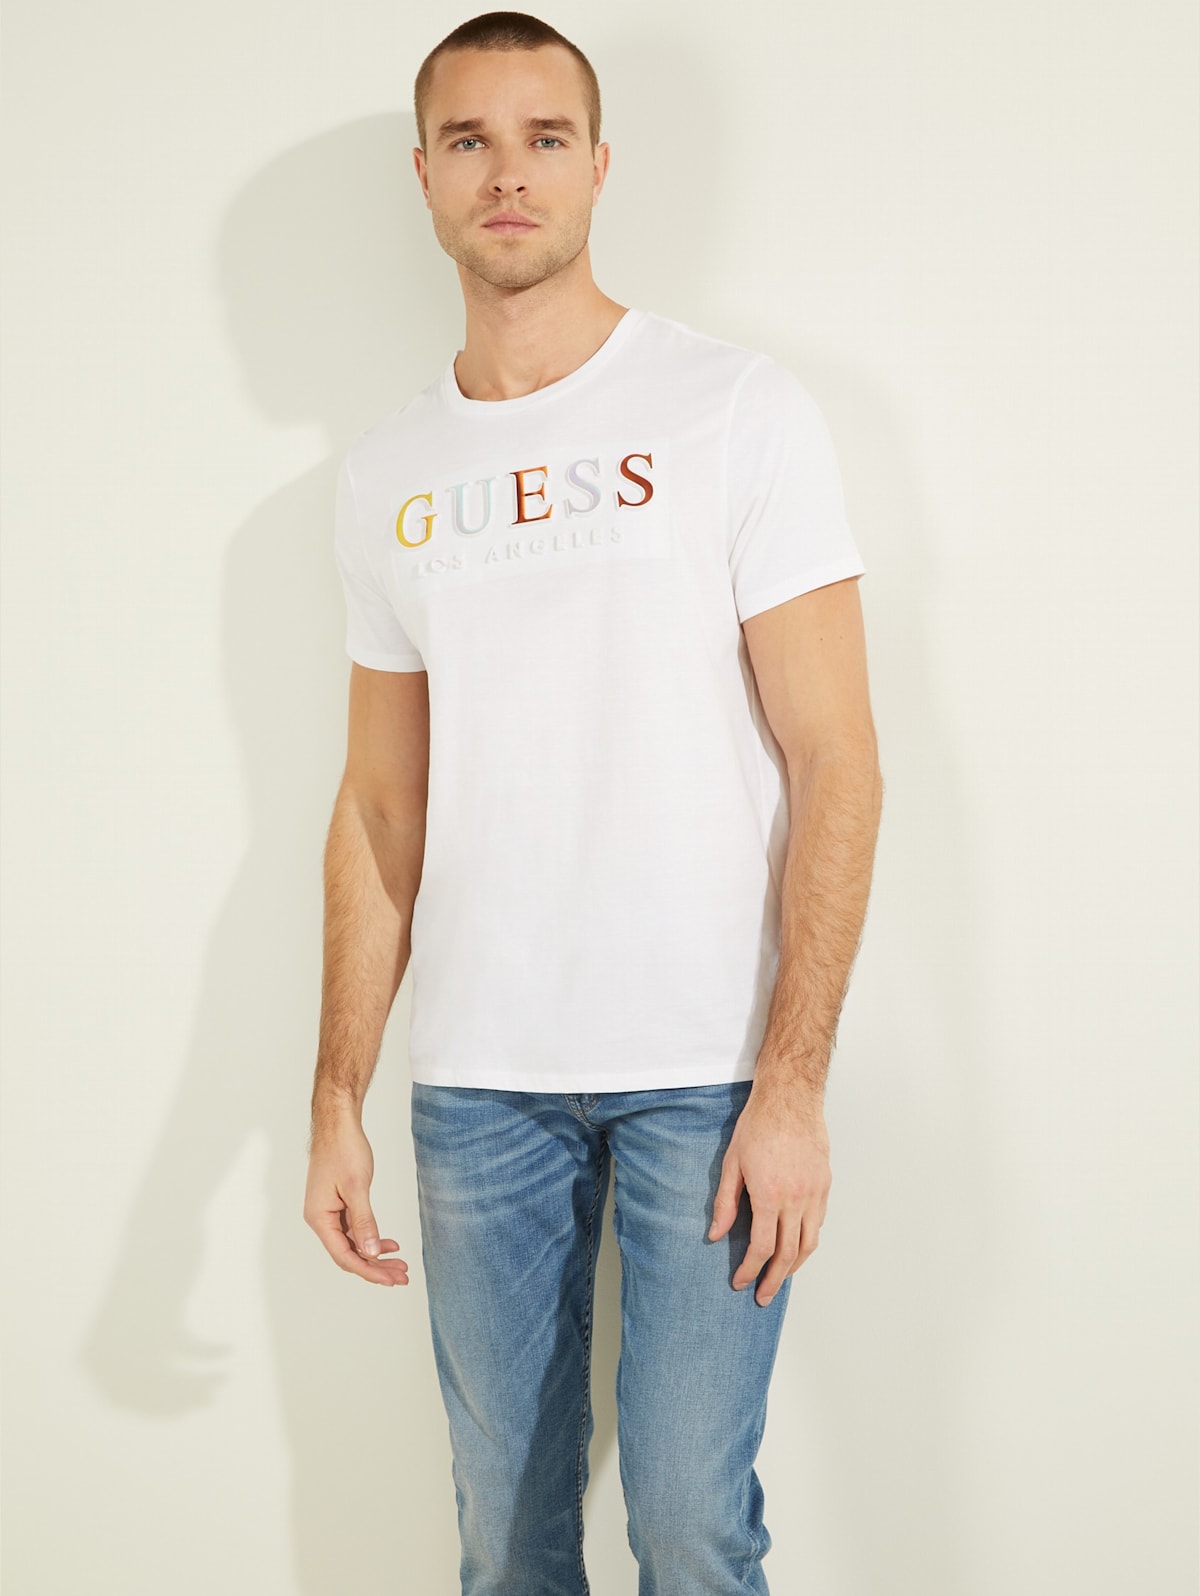 GUESS by Marciano T-Shirt Long Silver Logo 